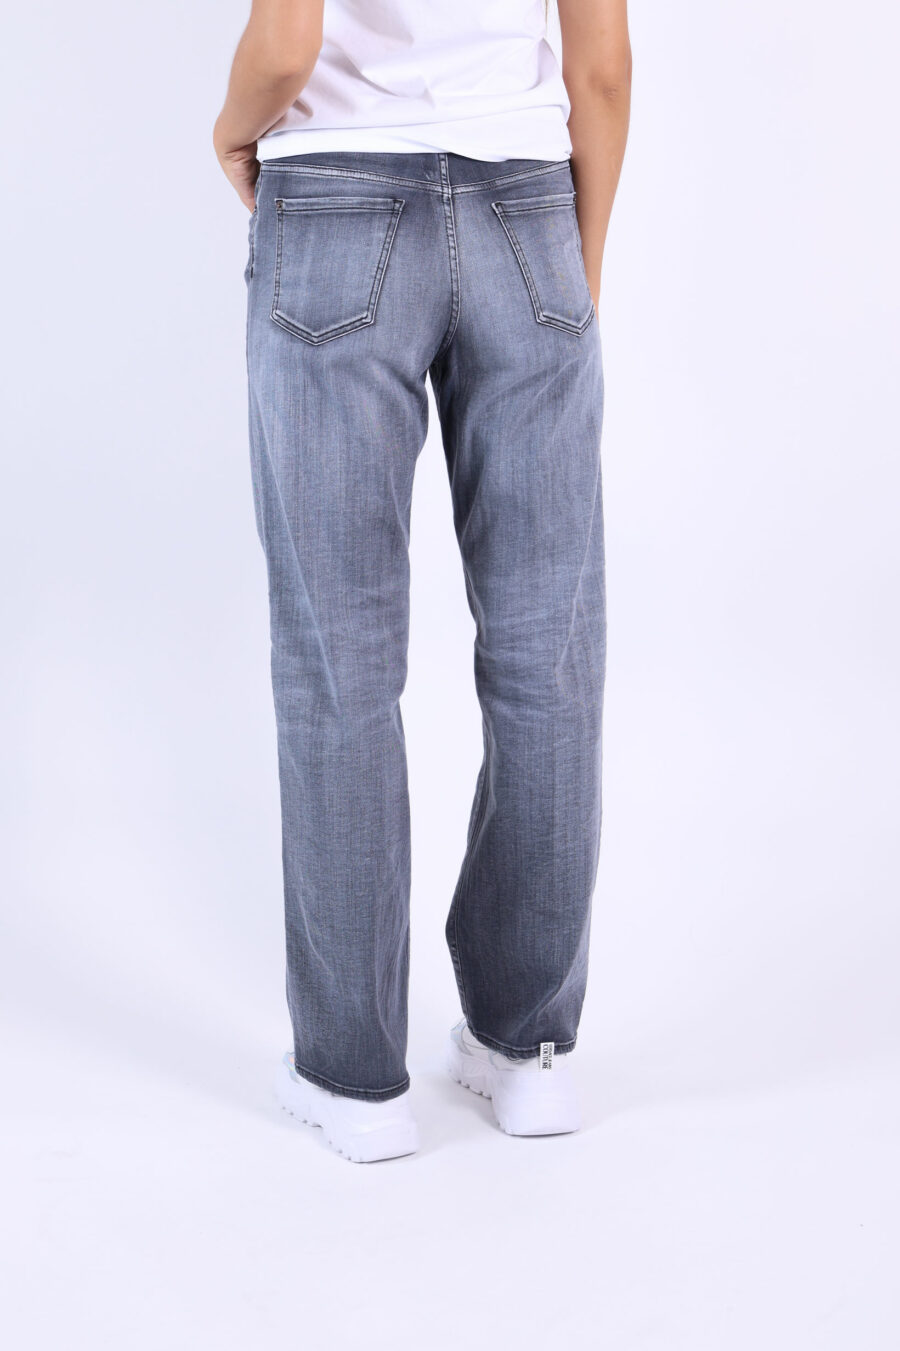 Jeans "San Diego jean" black worn - 361223054662201939 1